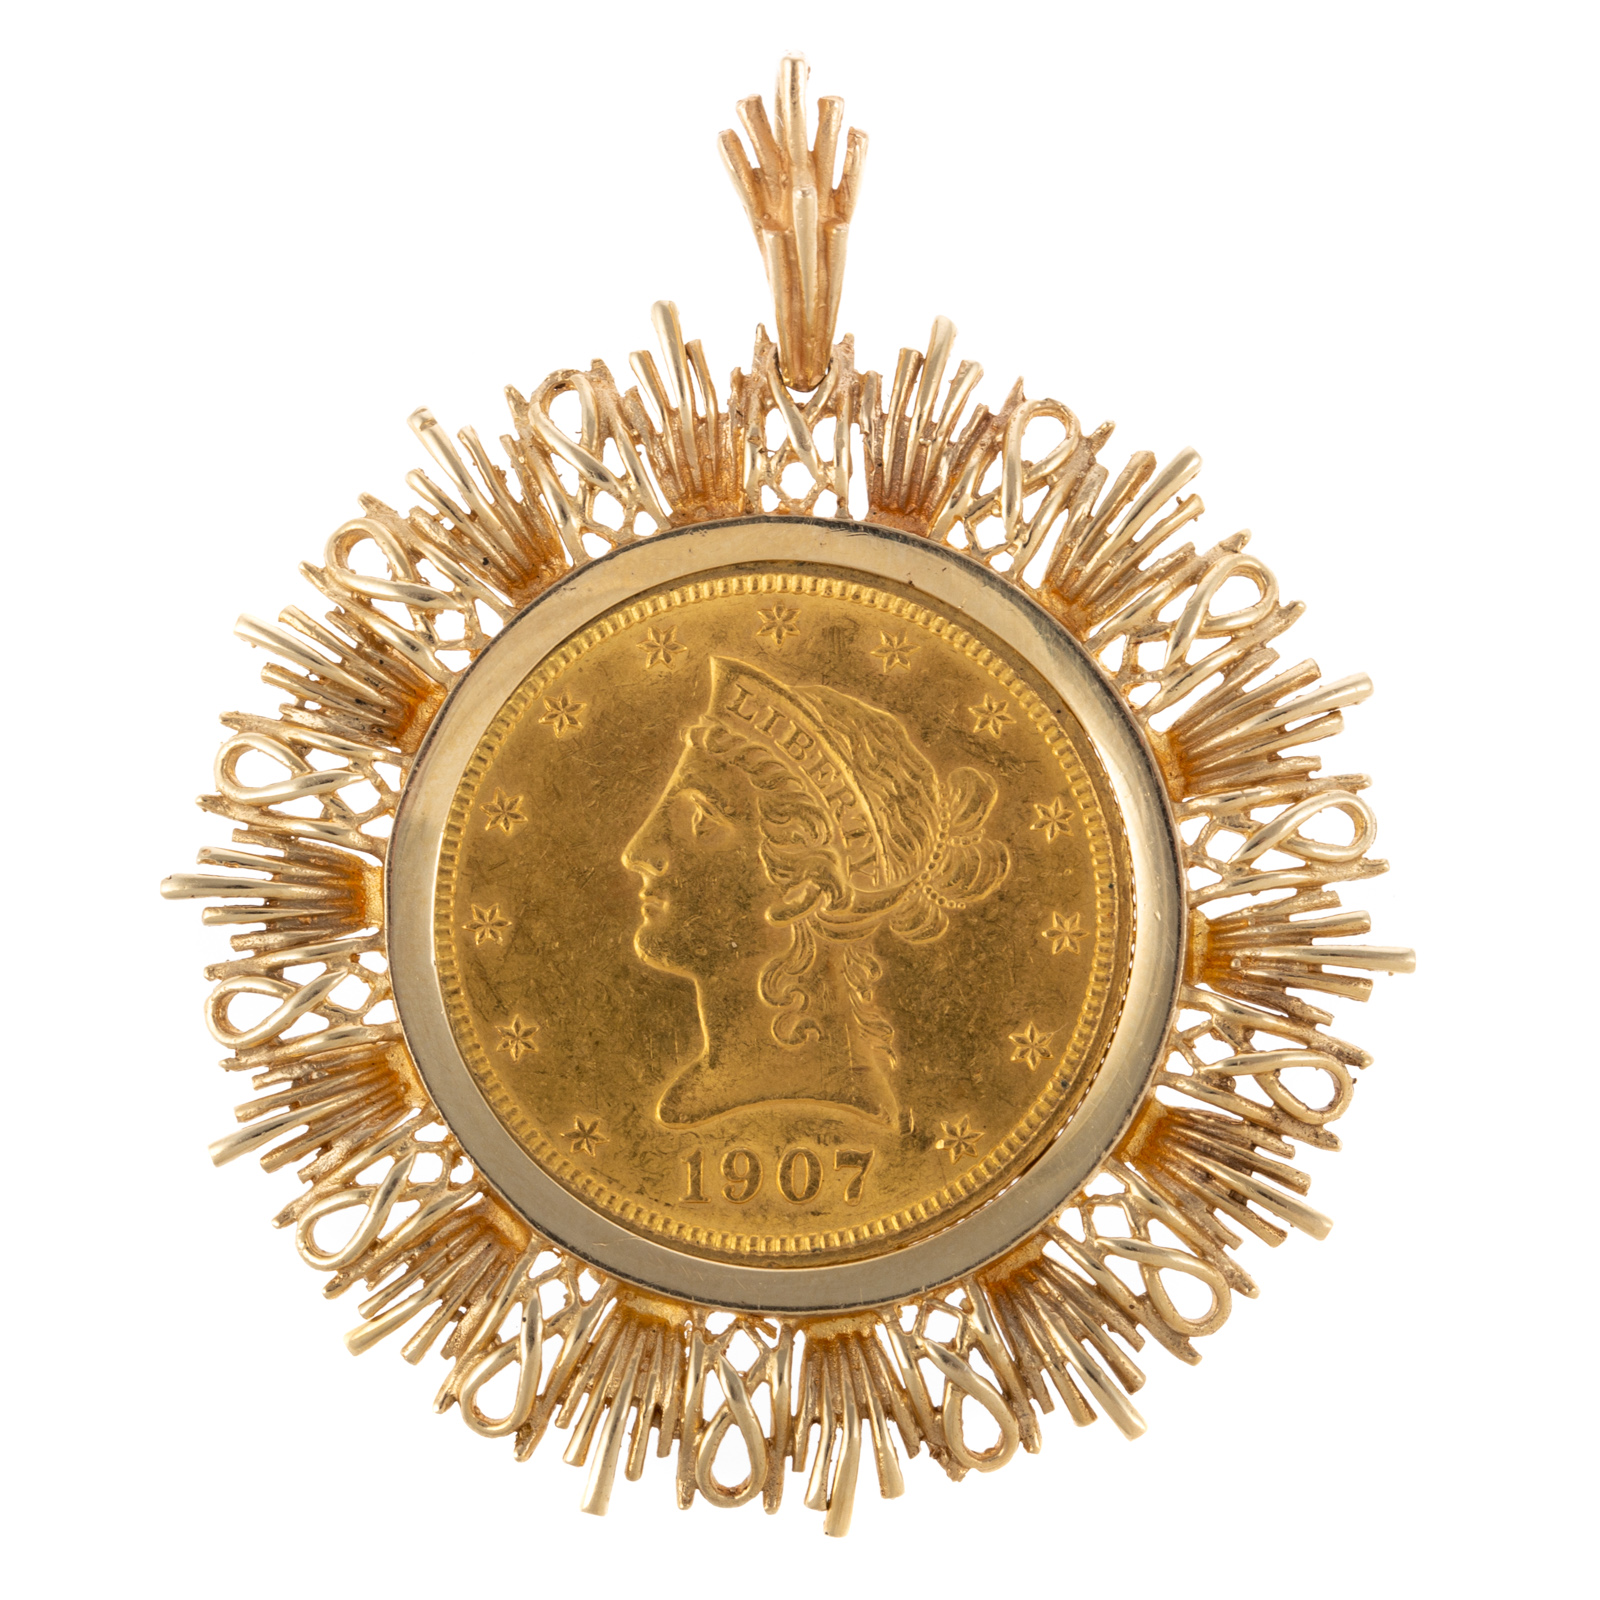 A 1907 $10 LIBERTY HEAD EAGLE GOLD